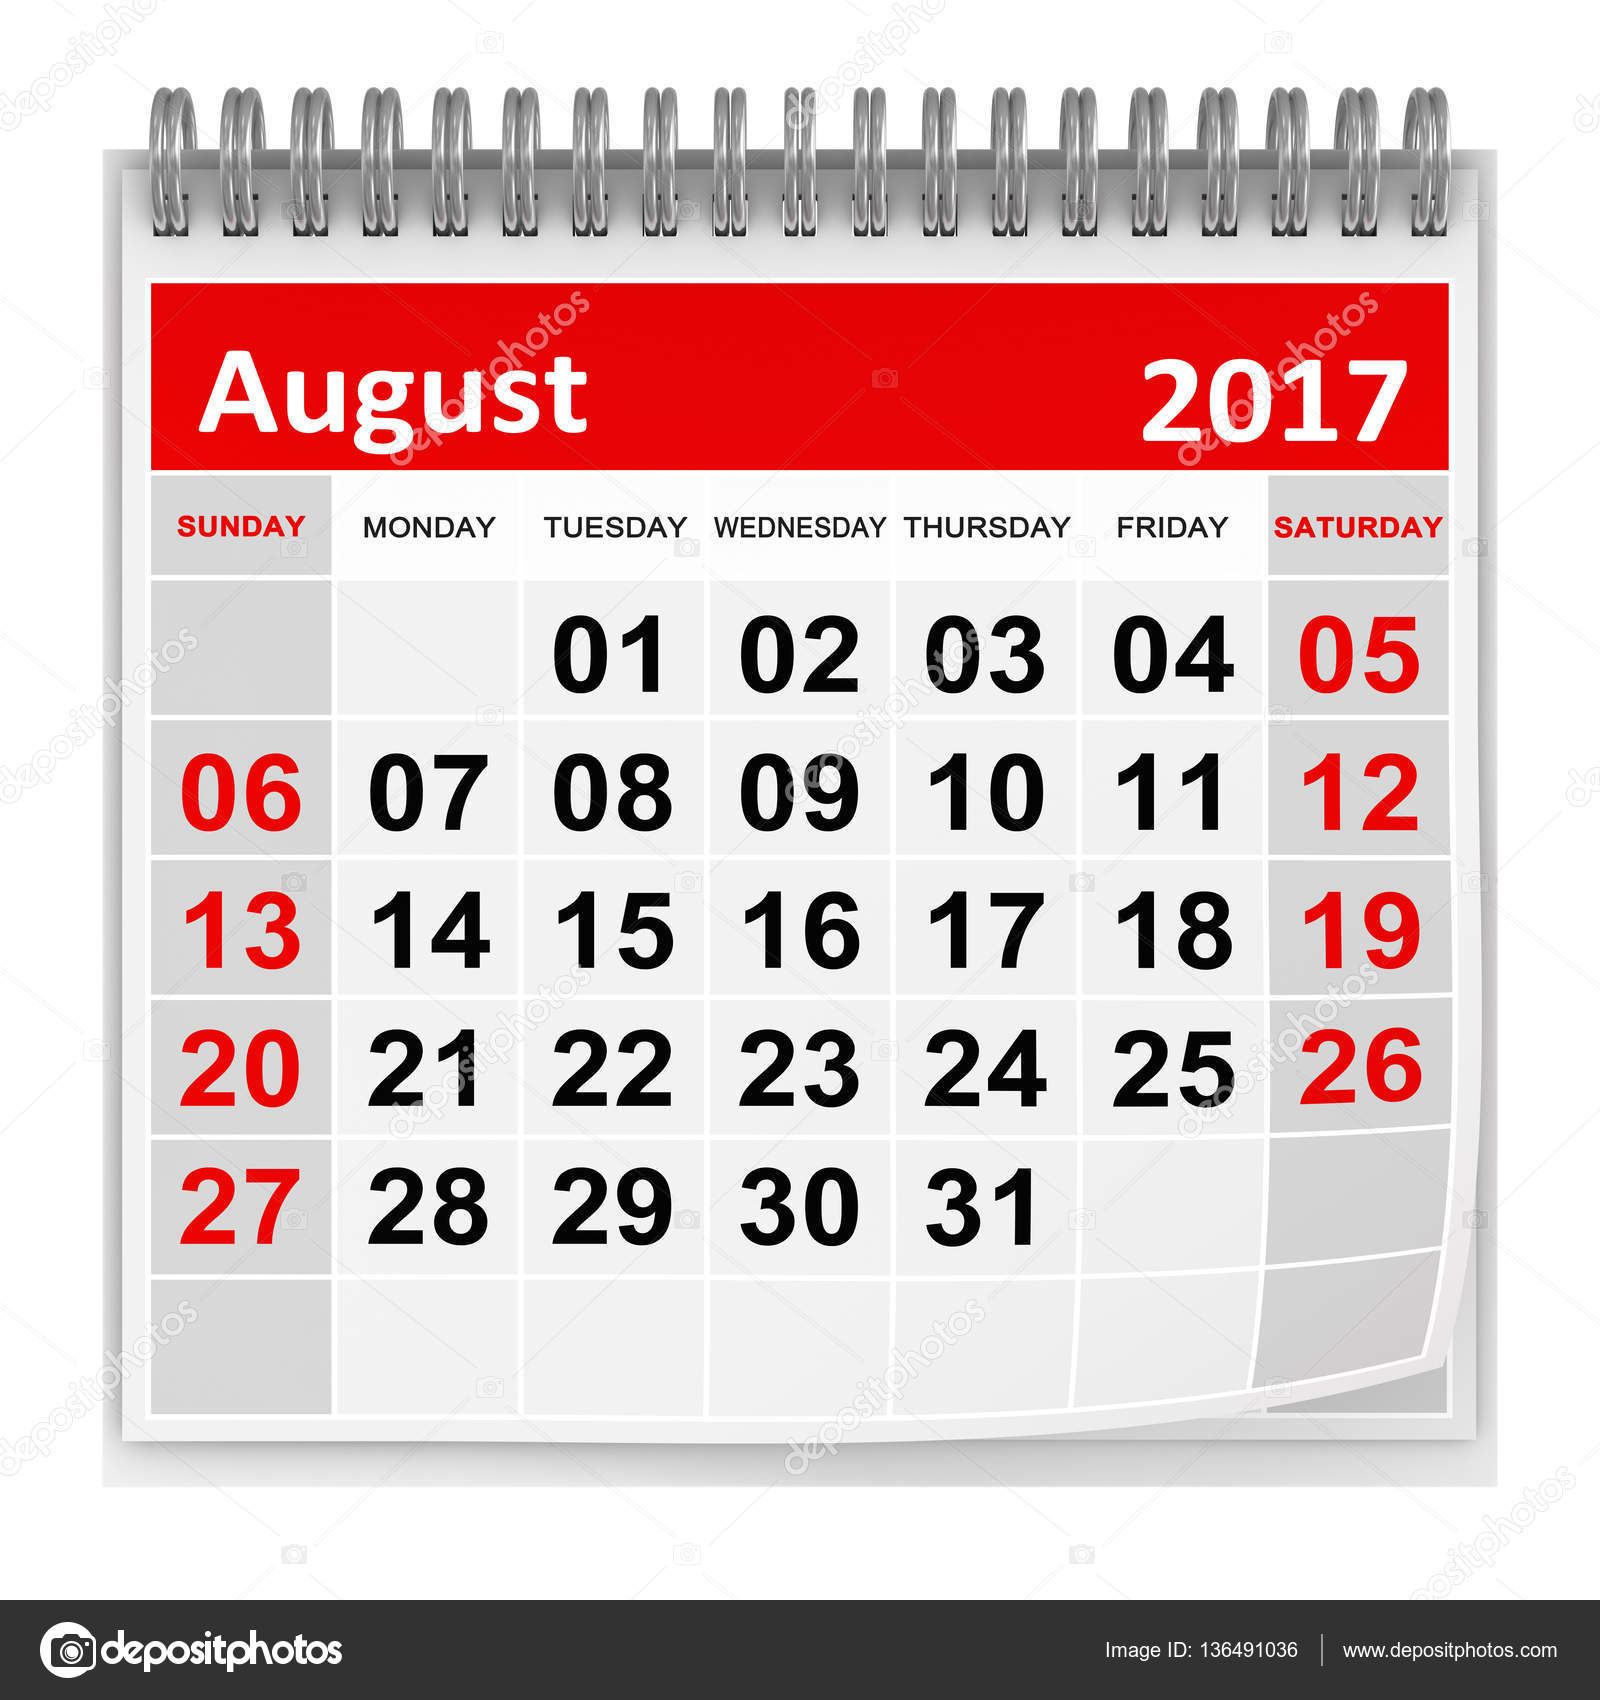 calendar-august-2017-stock-photo-adempercem-136491036